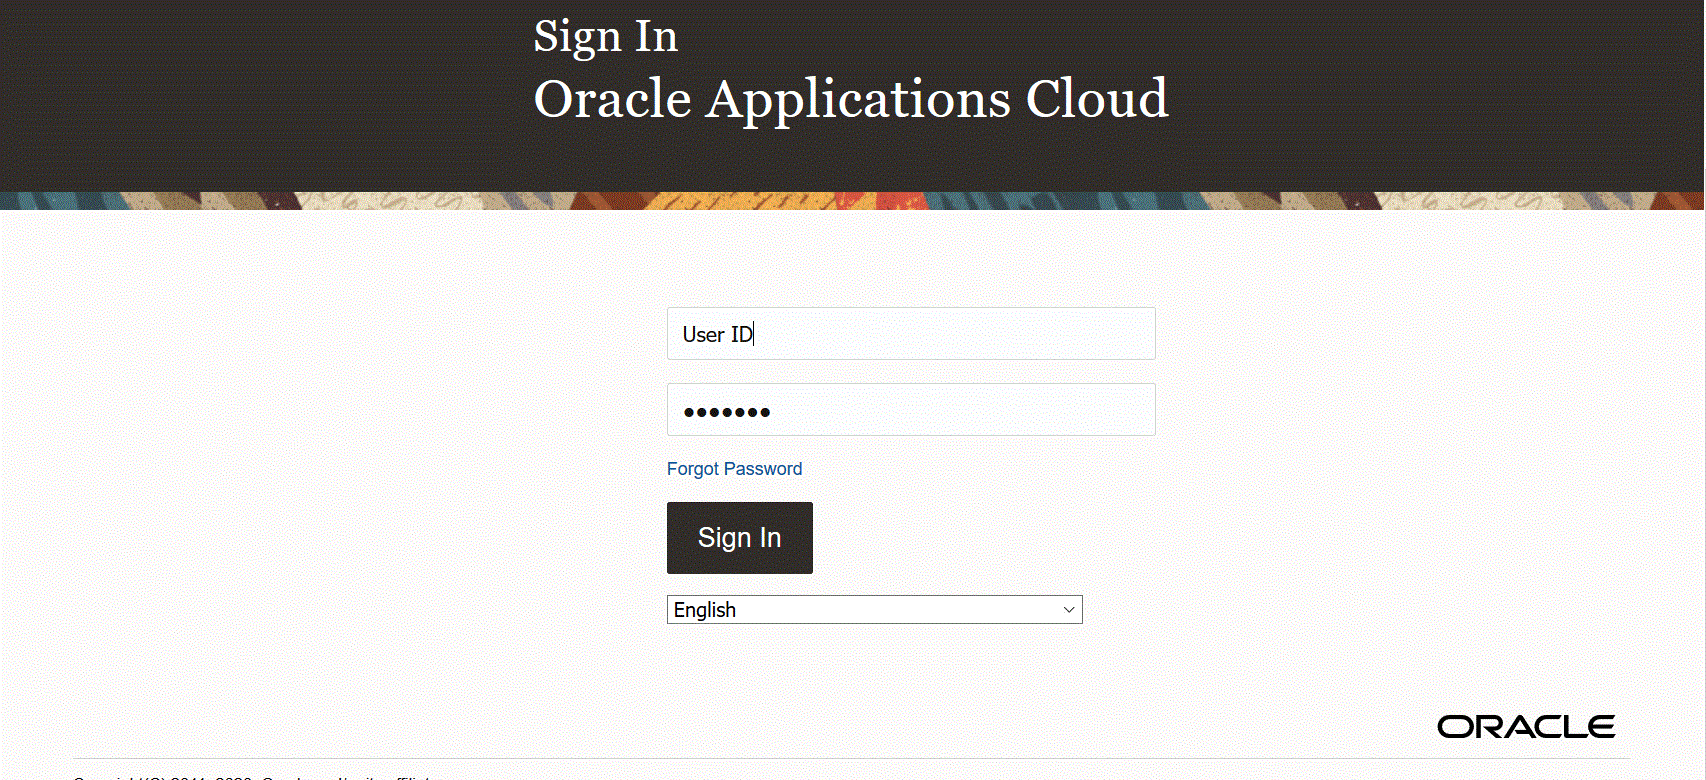 A imagem mostra o Oracle Applications Cloud